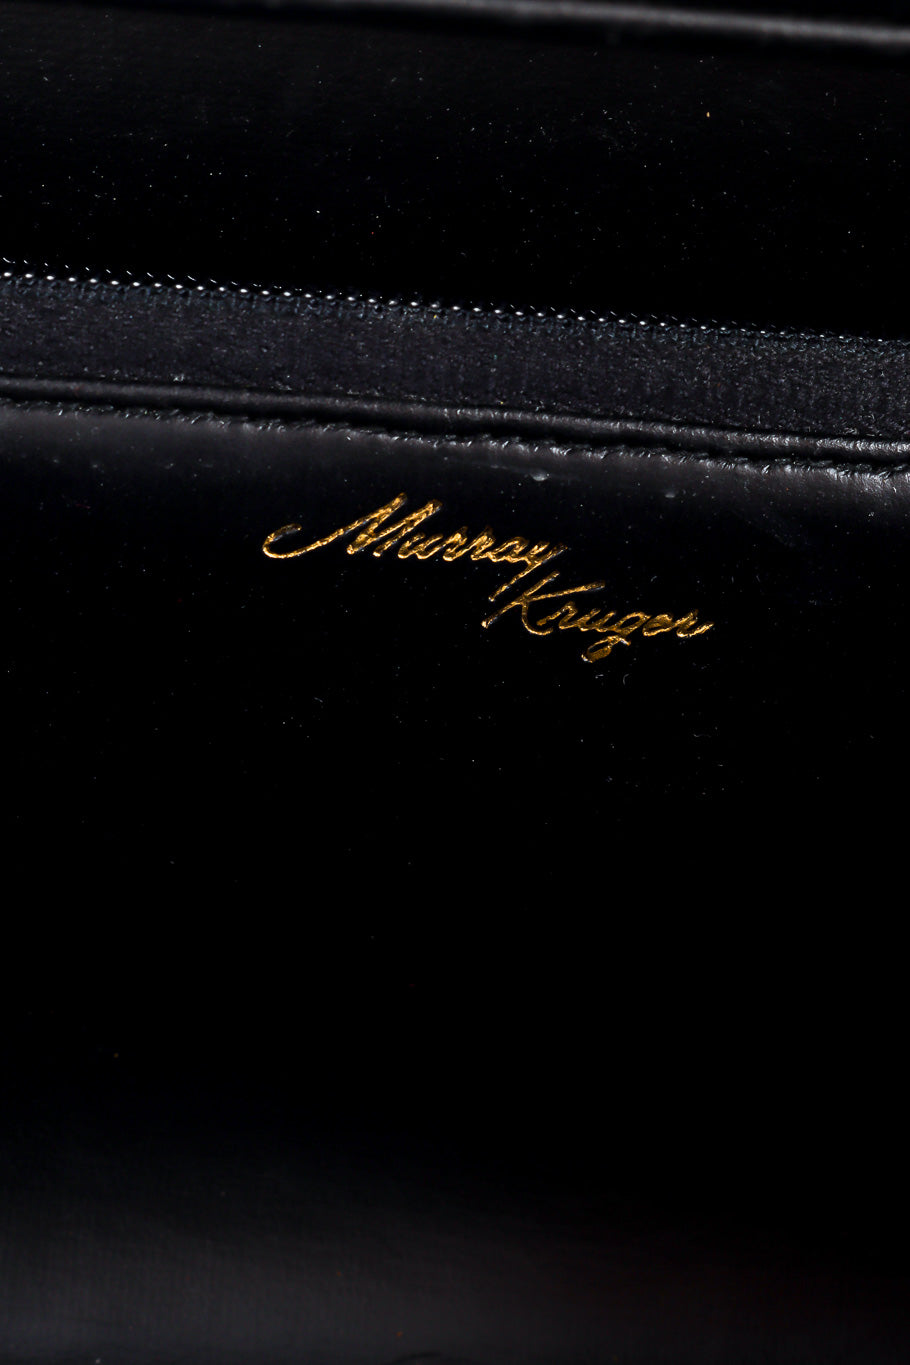 Murray Kruger european crest box bag designer signature @recessla